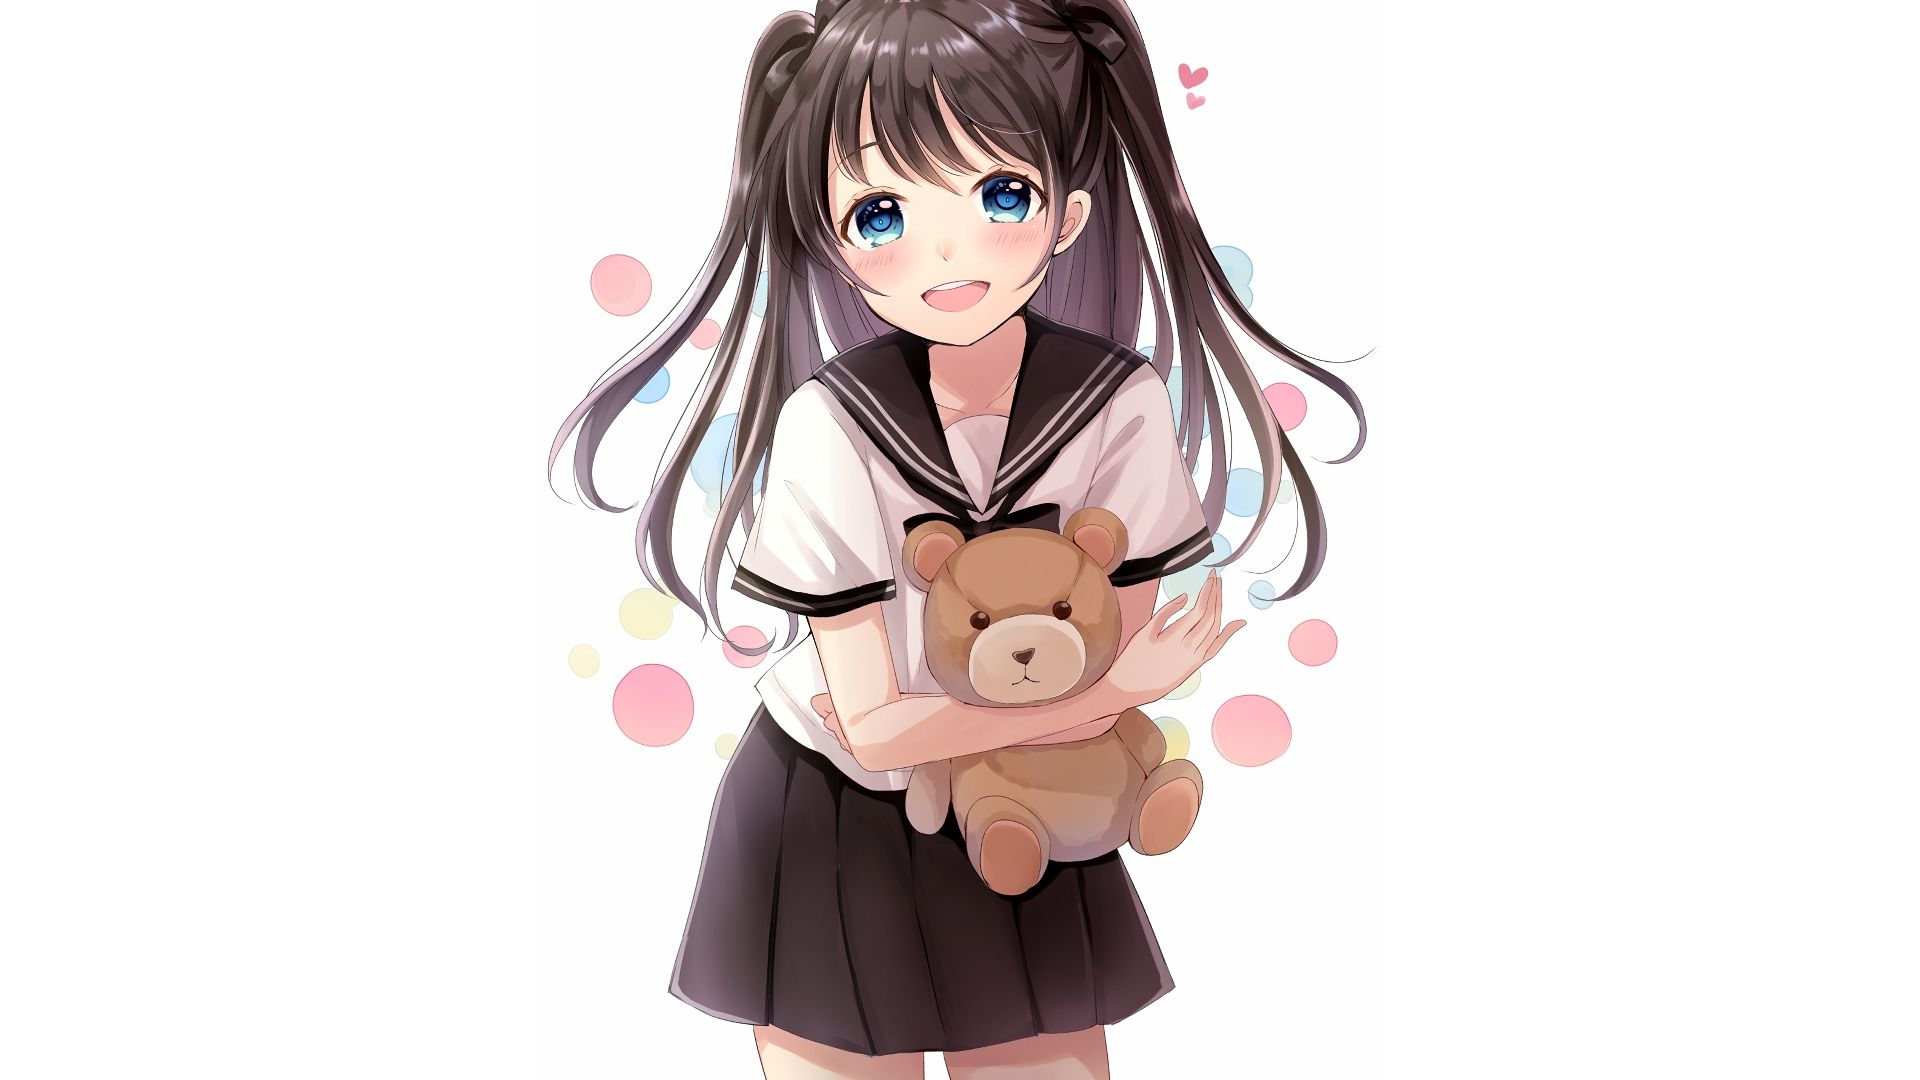 Cute Anime Girl With Teddy Bear by CupcakesRenders on DeviantArt